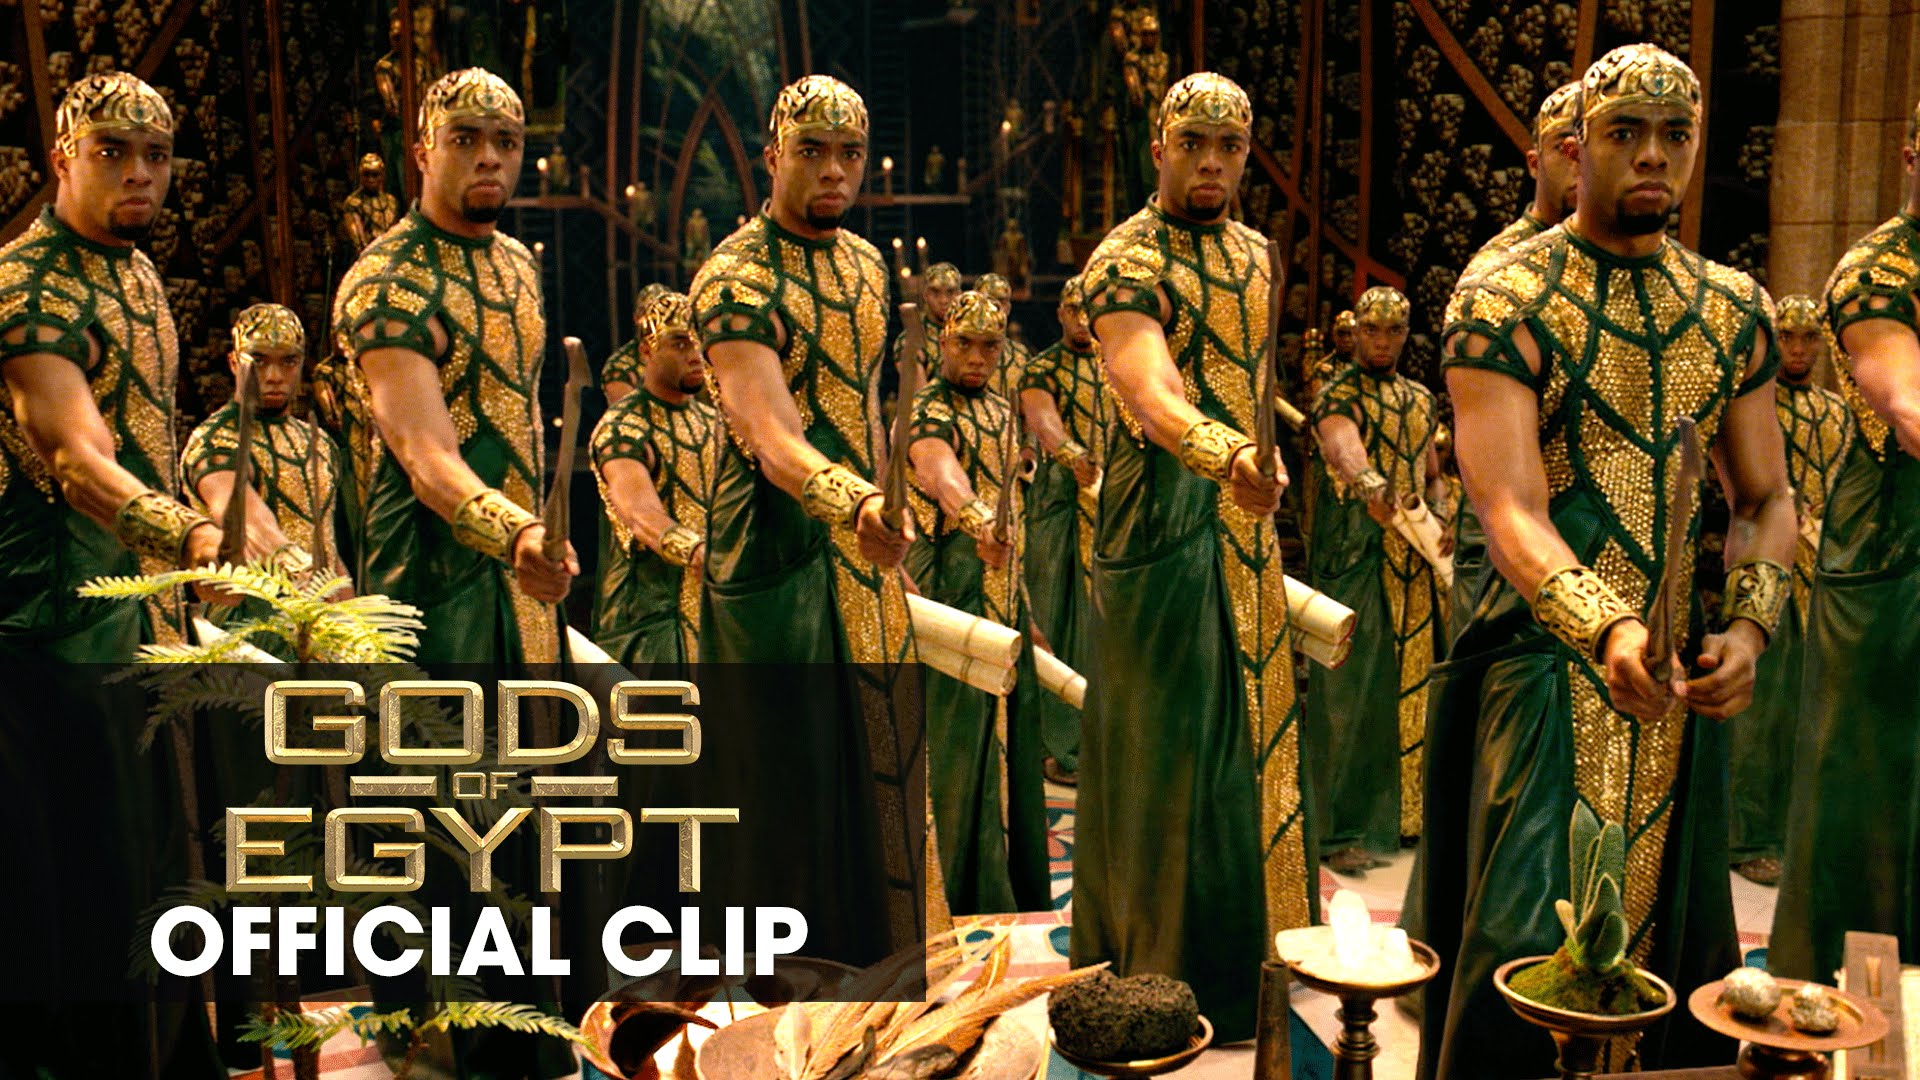 Gods of Egypt (2016 Movie - Gerard Butler) Official Clip – “I Outnumber You”